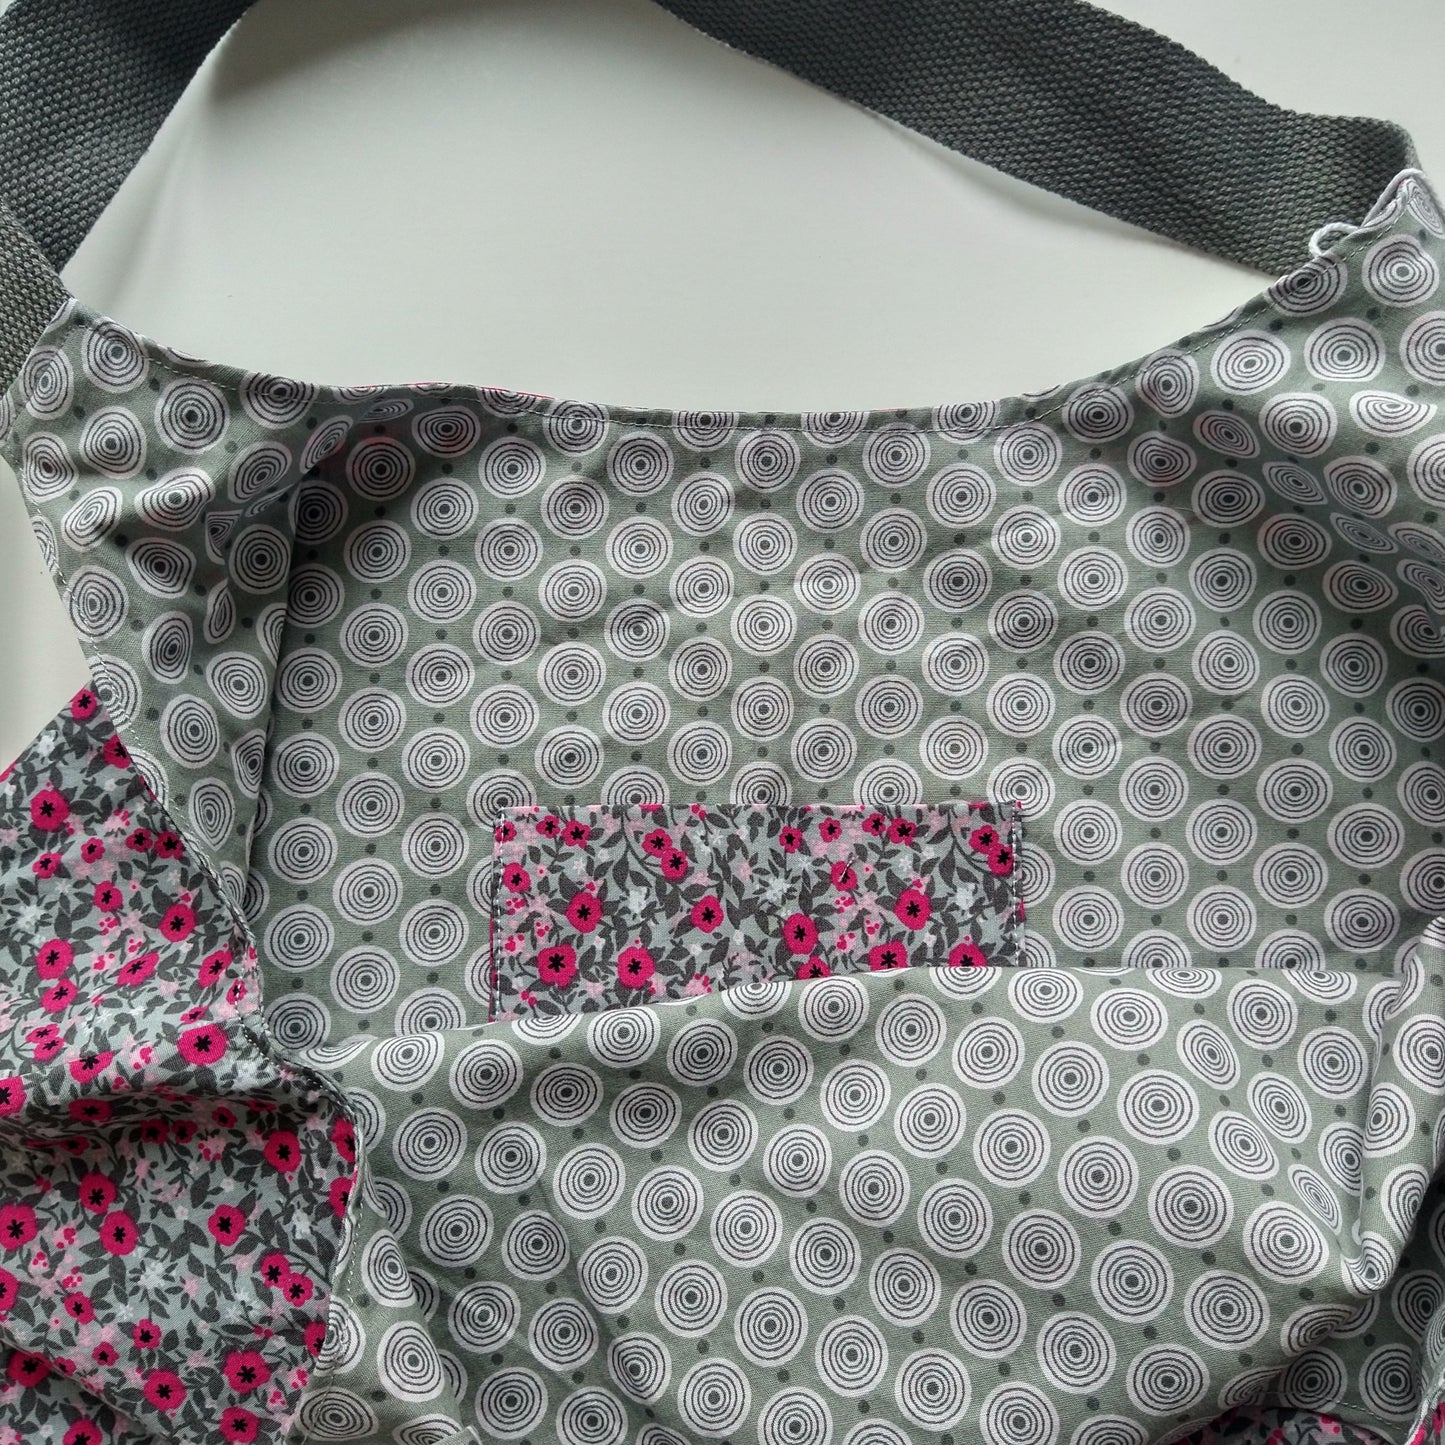 Shopping bag, reversibe, size medium, grey pink flowers (Handmade in Canada)